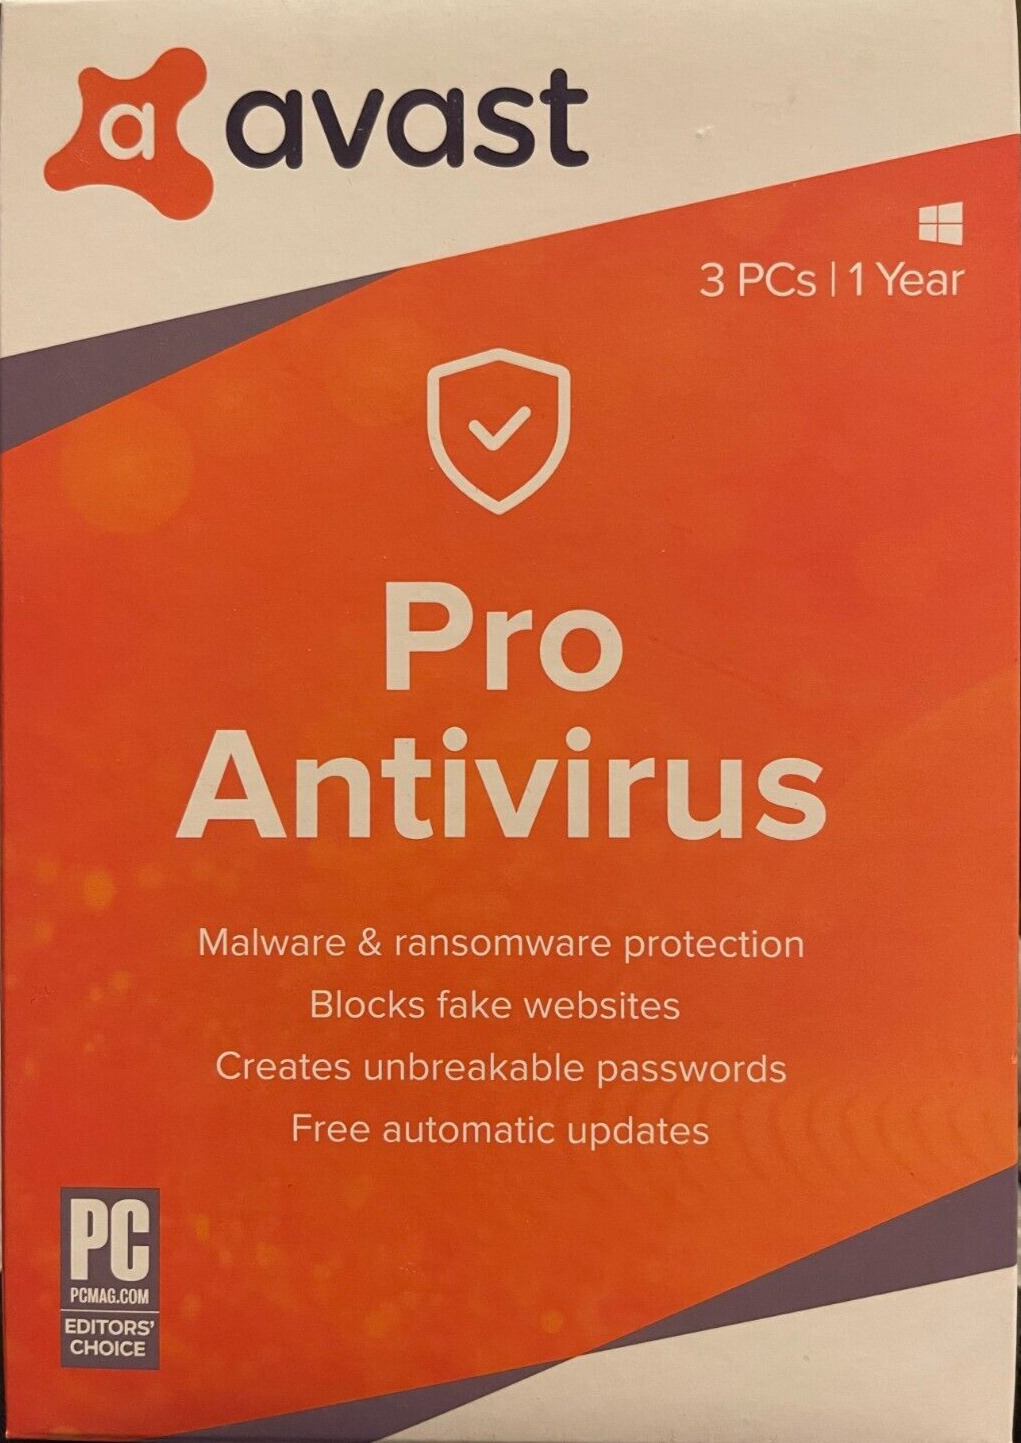 Avast Pro Antivirus for 3 PCs / 1 Year